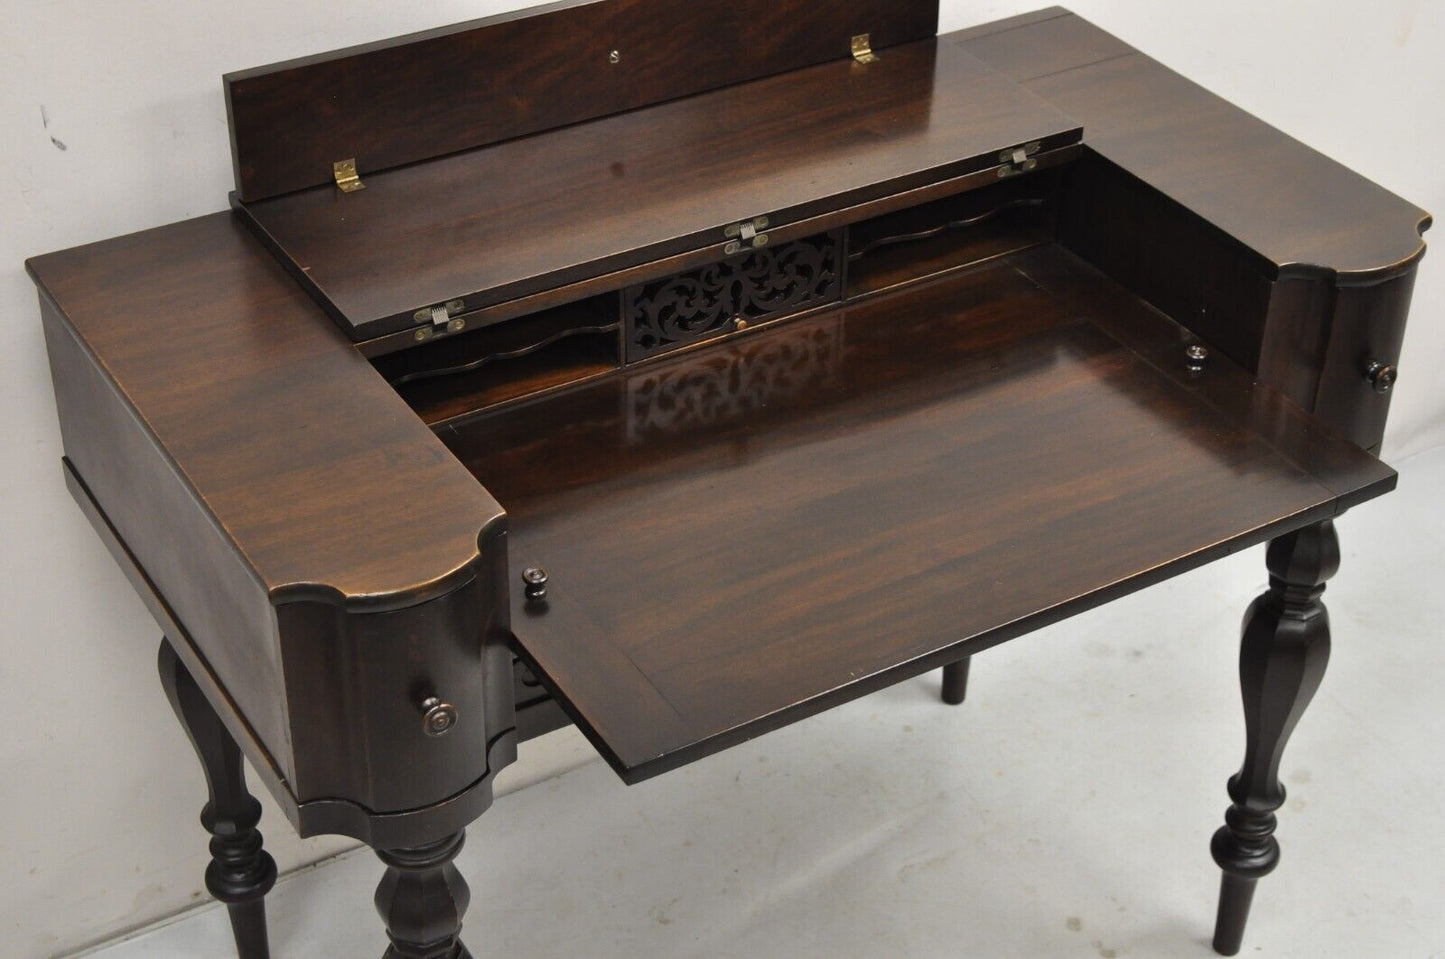 Antique Victorian Mahogany Spinet Piano Style Flip Top Secretary Writing Desk